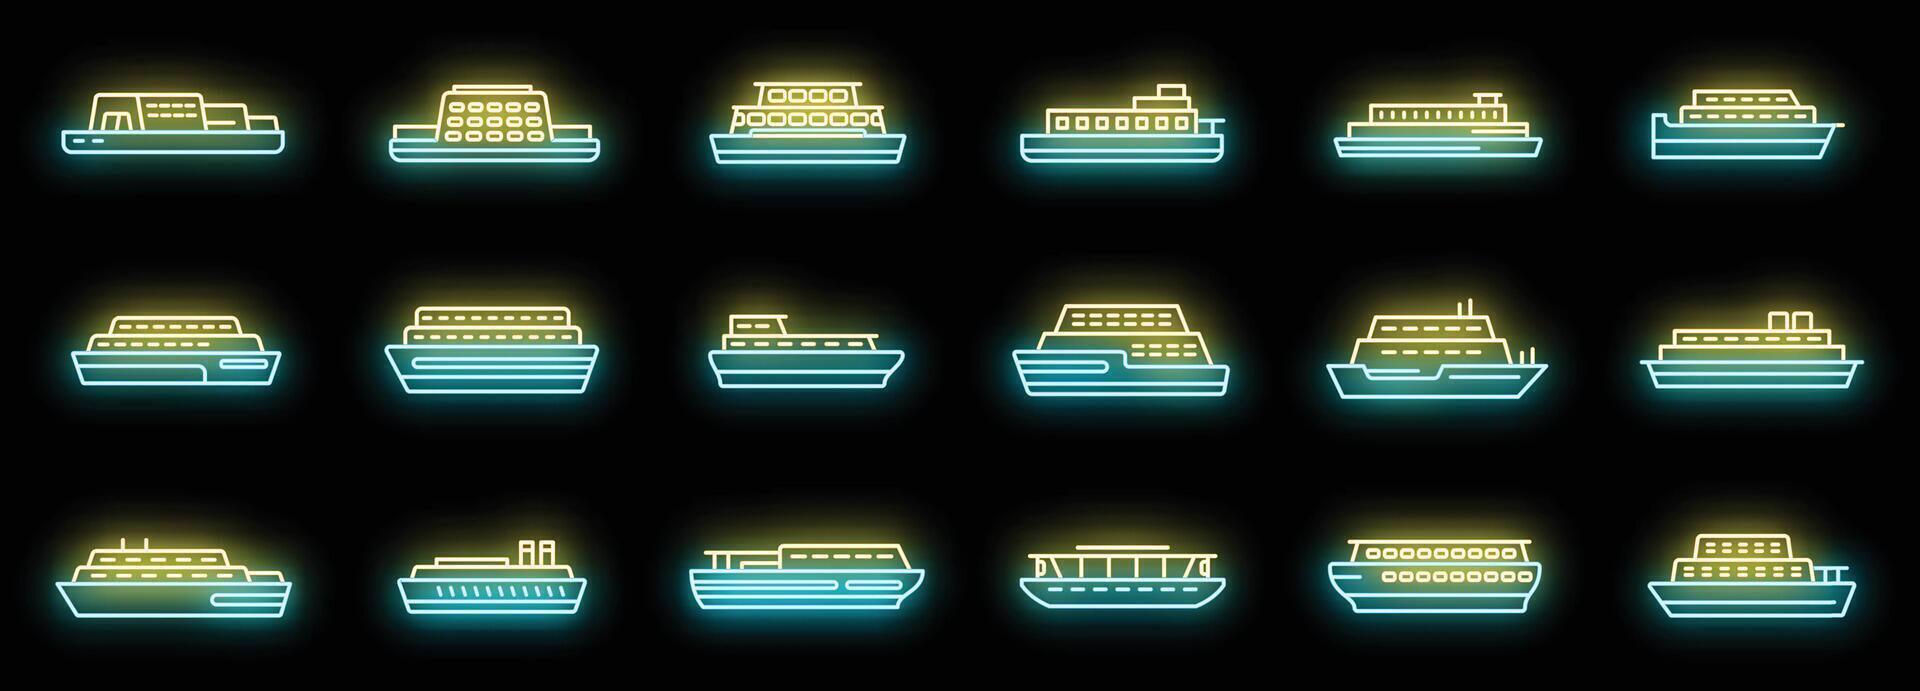 Ferry icons set vector neon